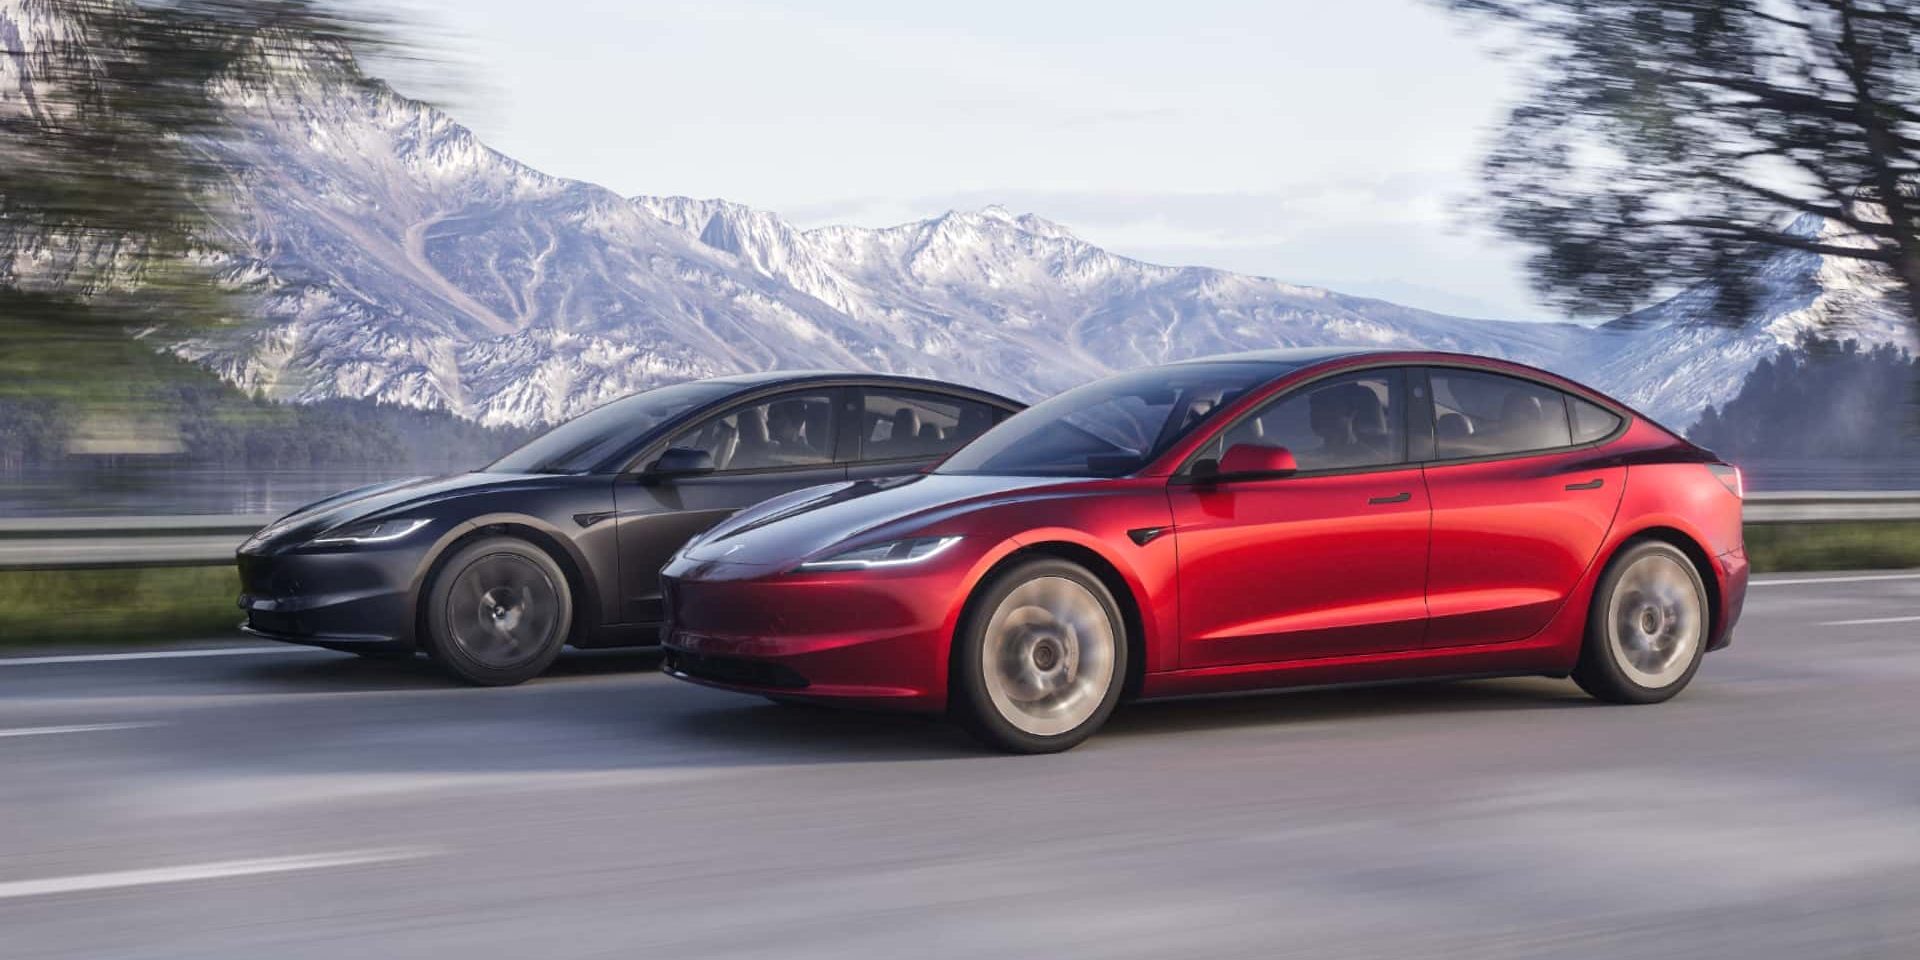 Tesla Model 3 (Highland) test drive: Making a good first